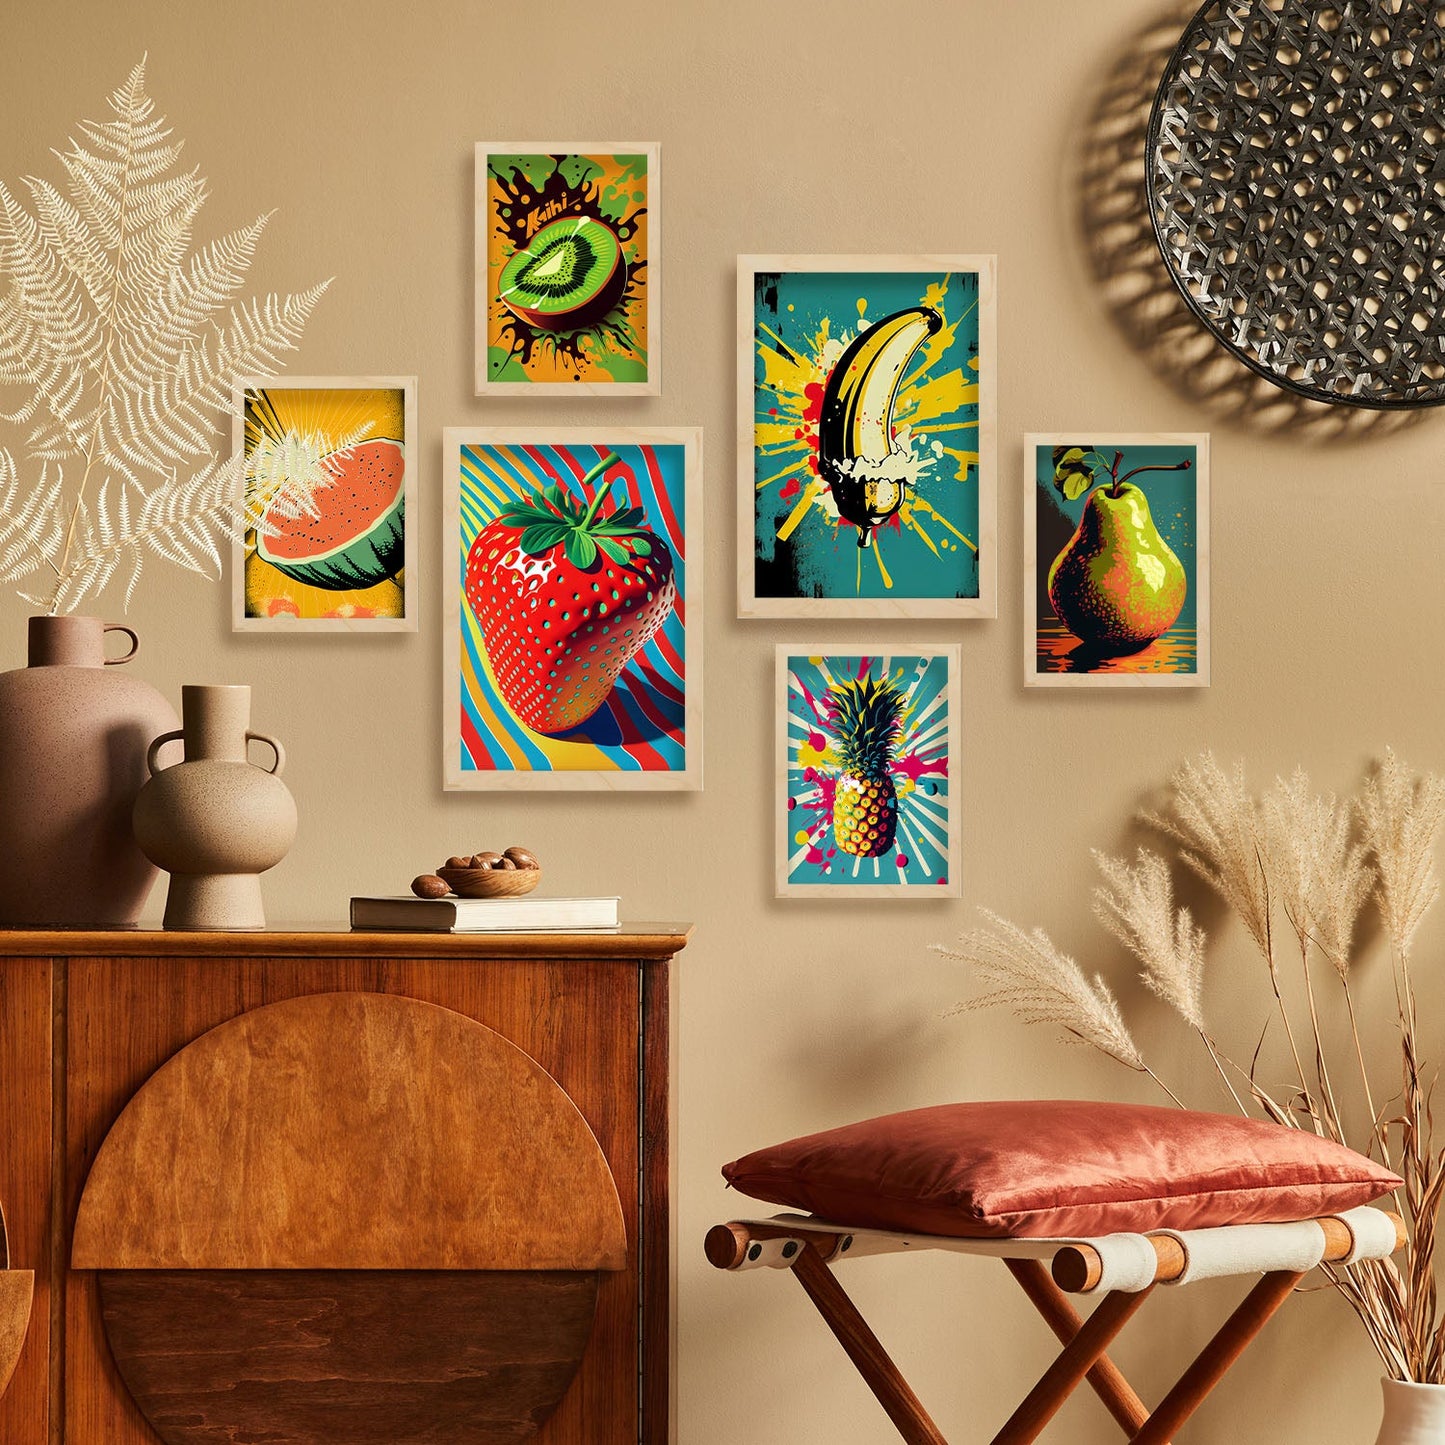 Nacnic Pop Art Vegtables Set_2. Aesthetic Wall Art Prints for Bedroom or Living Room Design.